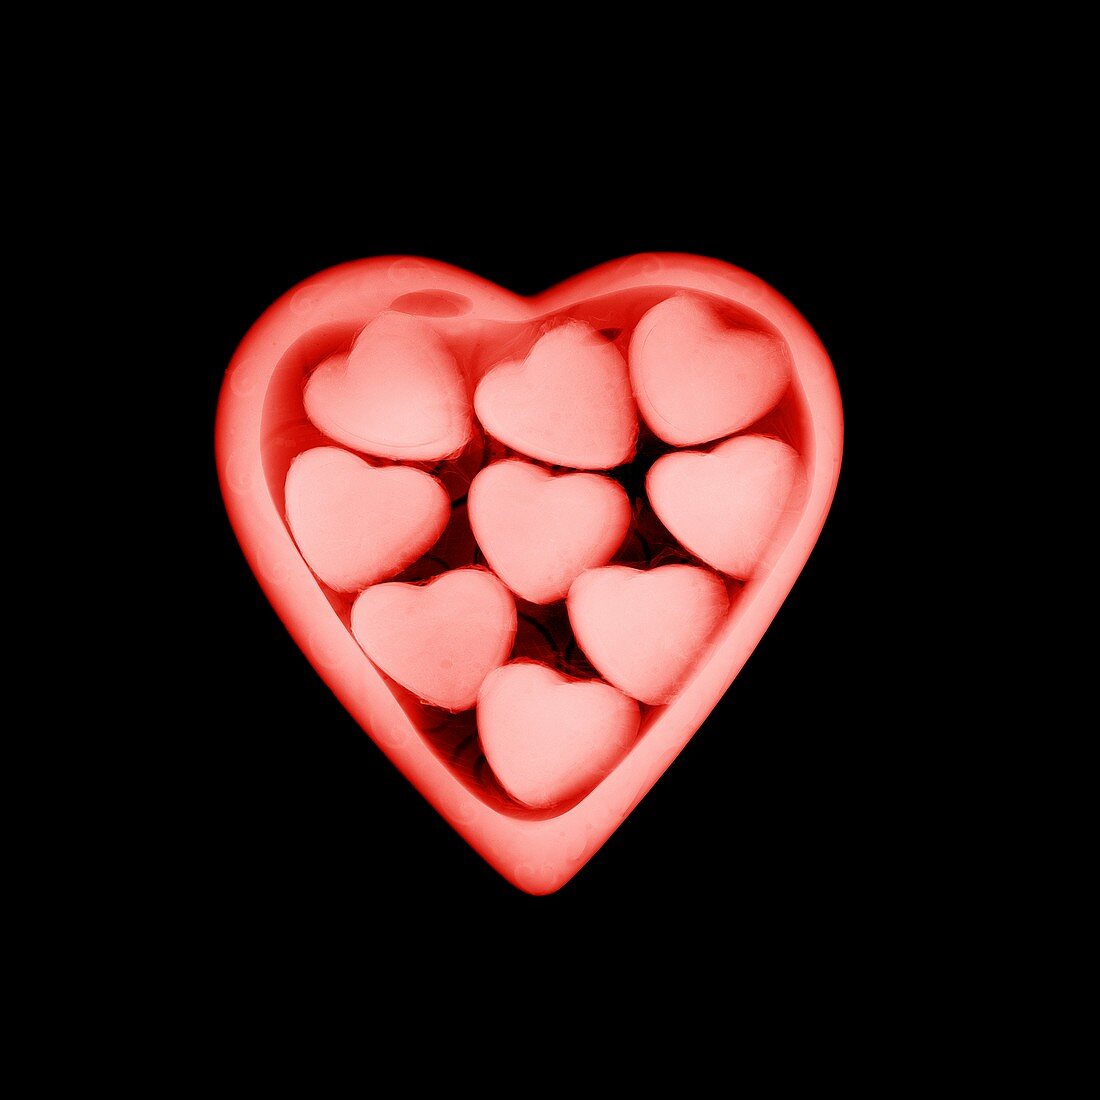 Heart shaped chocolates in a box, X-ray